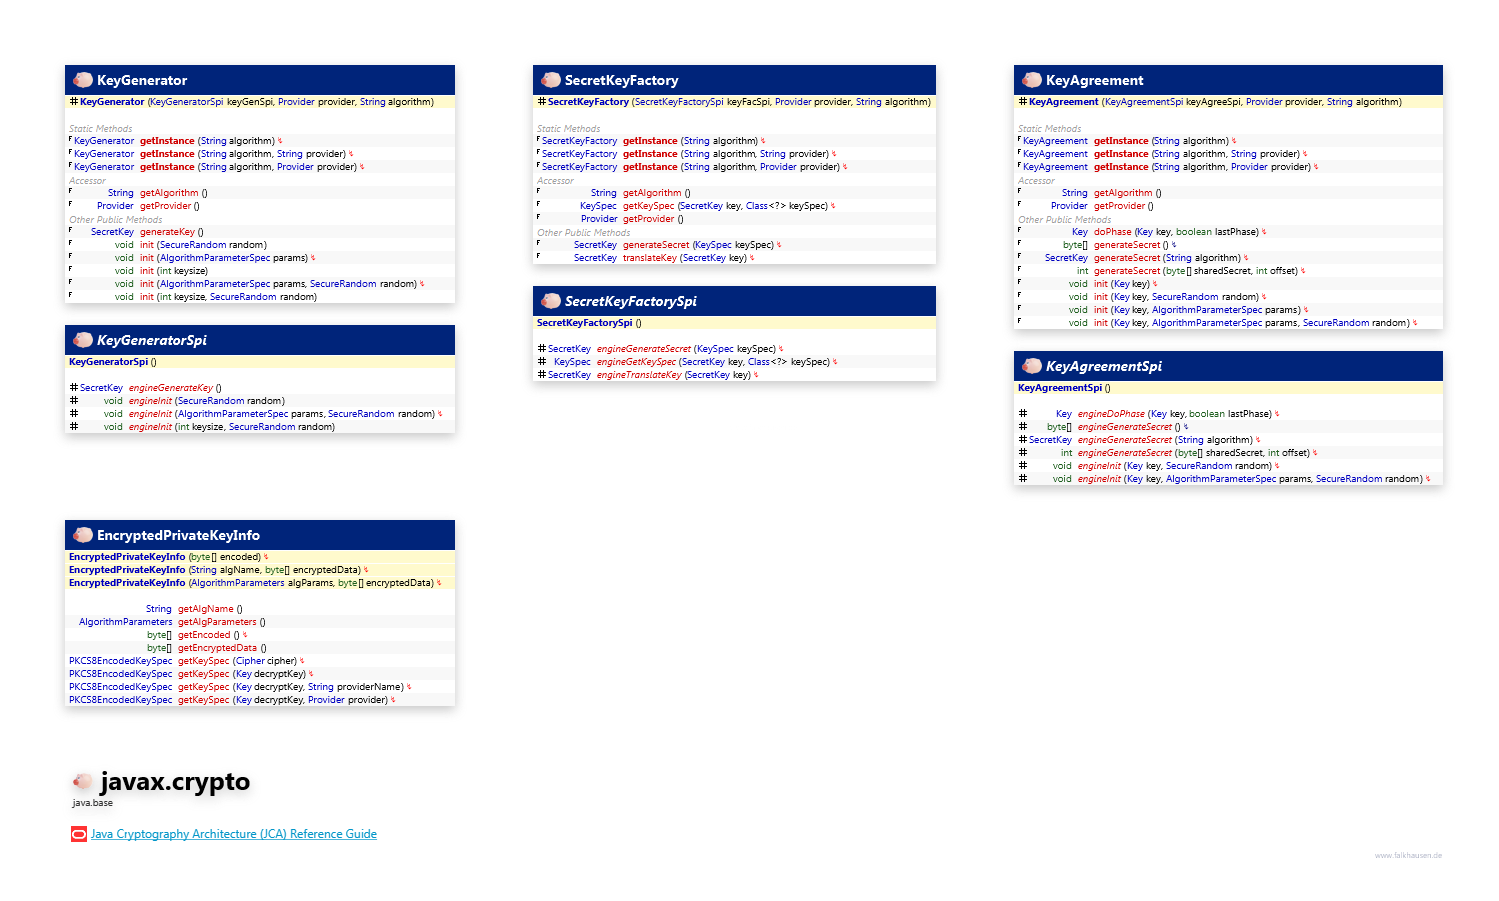 javax.crypto KeyManagement class diagram and api documentation for Java 10